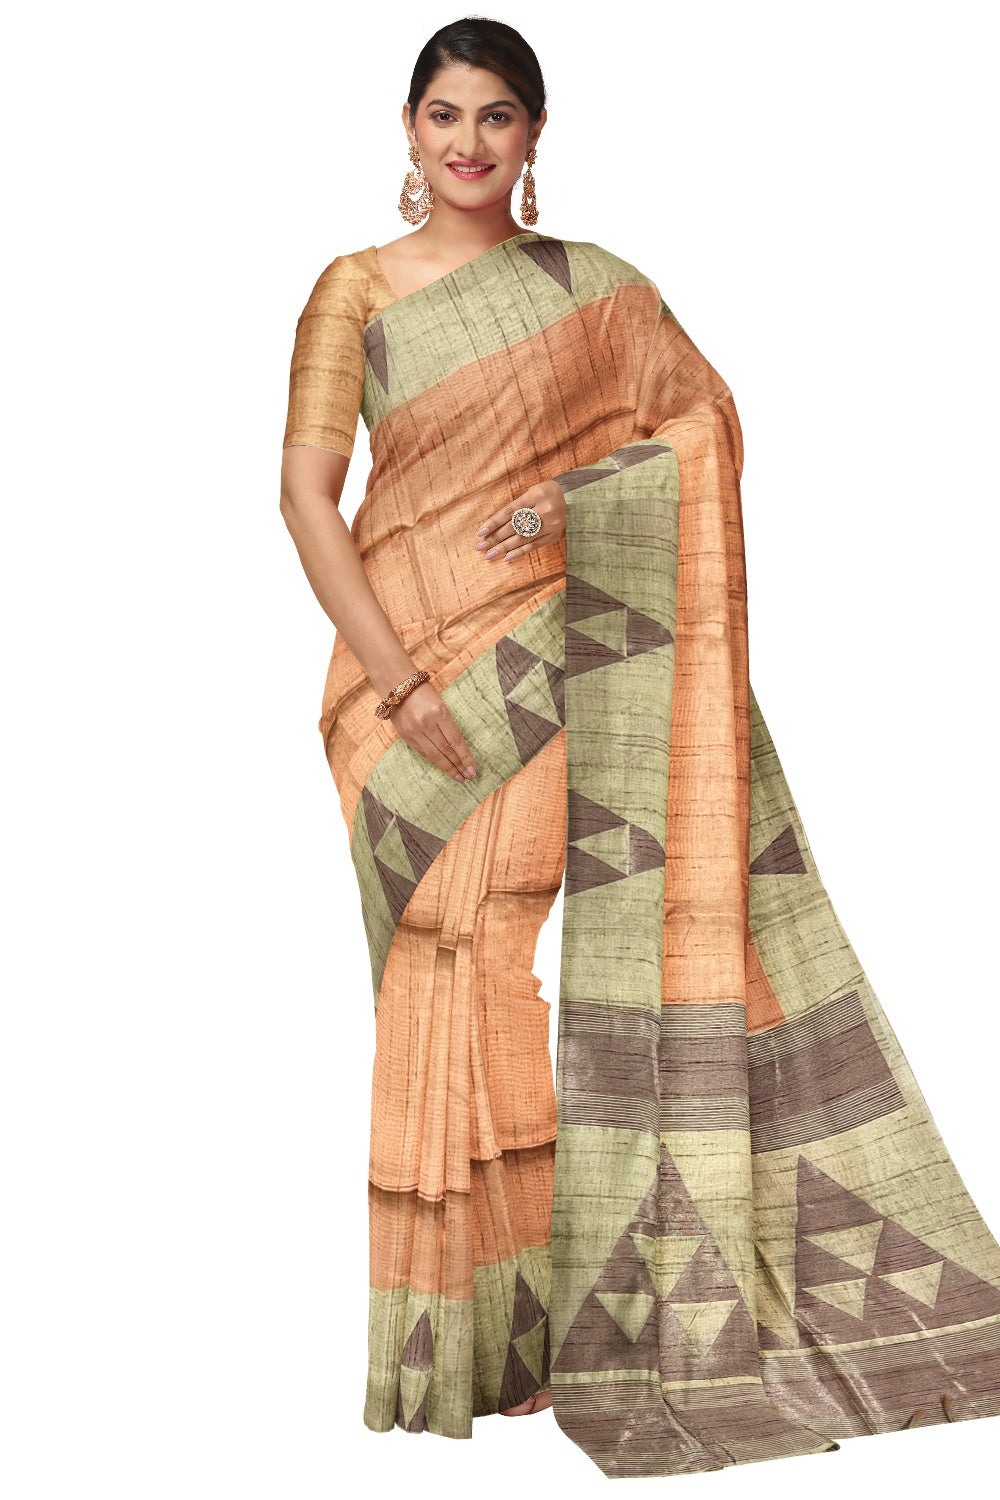 Southloom Orange Semi Tussar Saree with Light Brown Designer Pallu